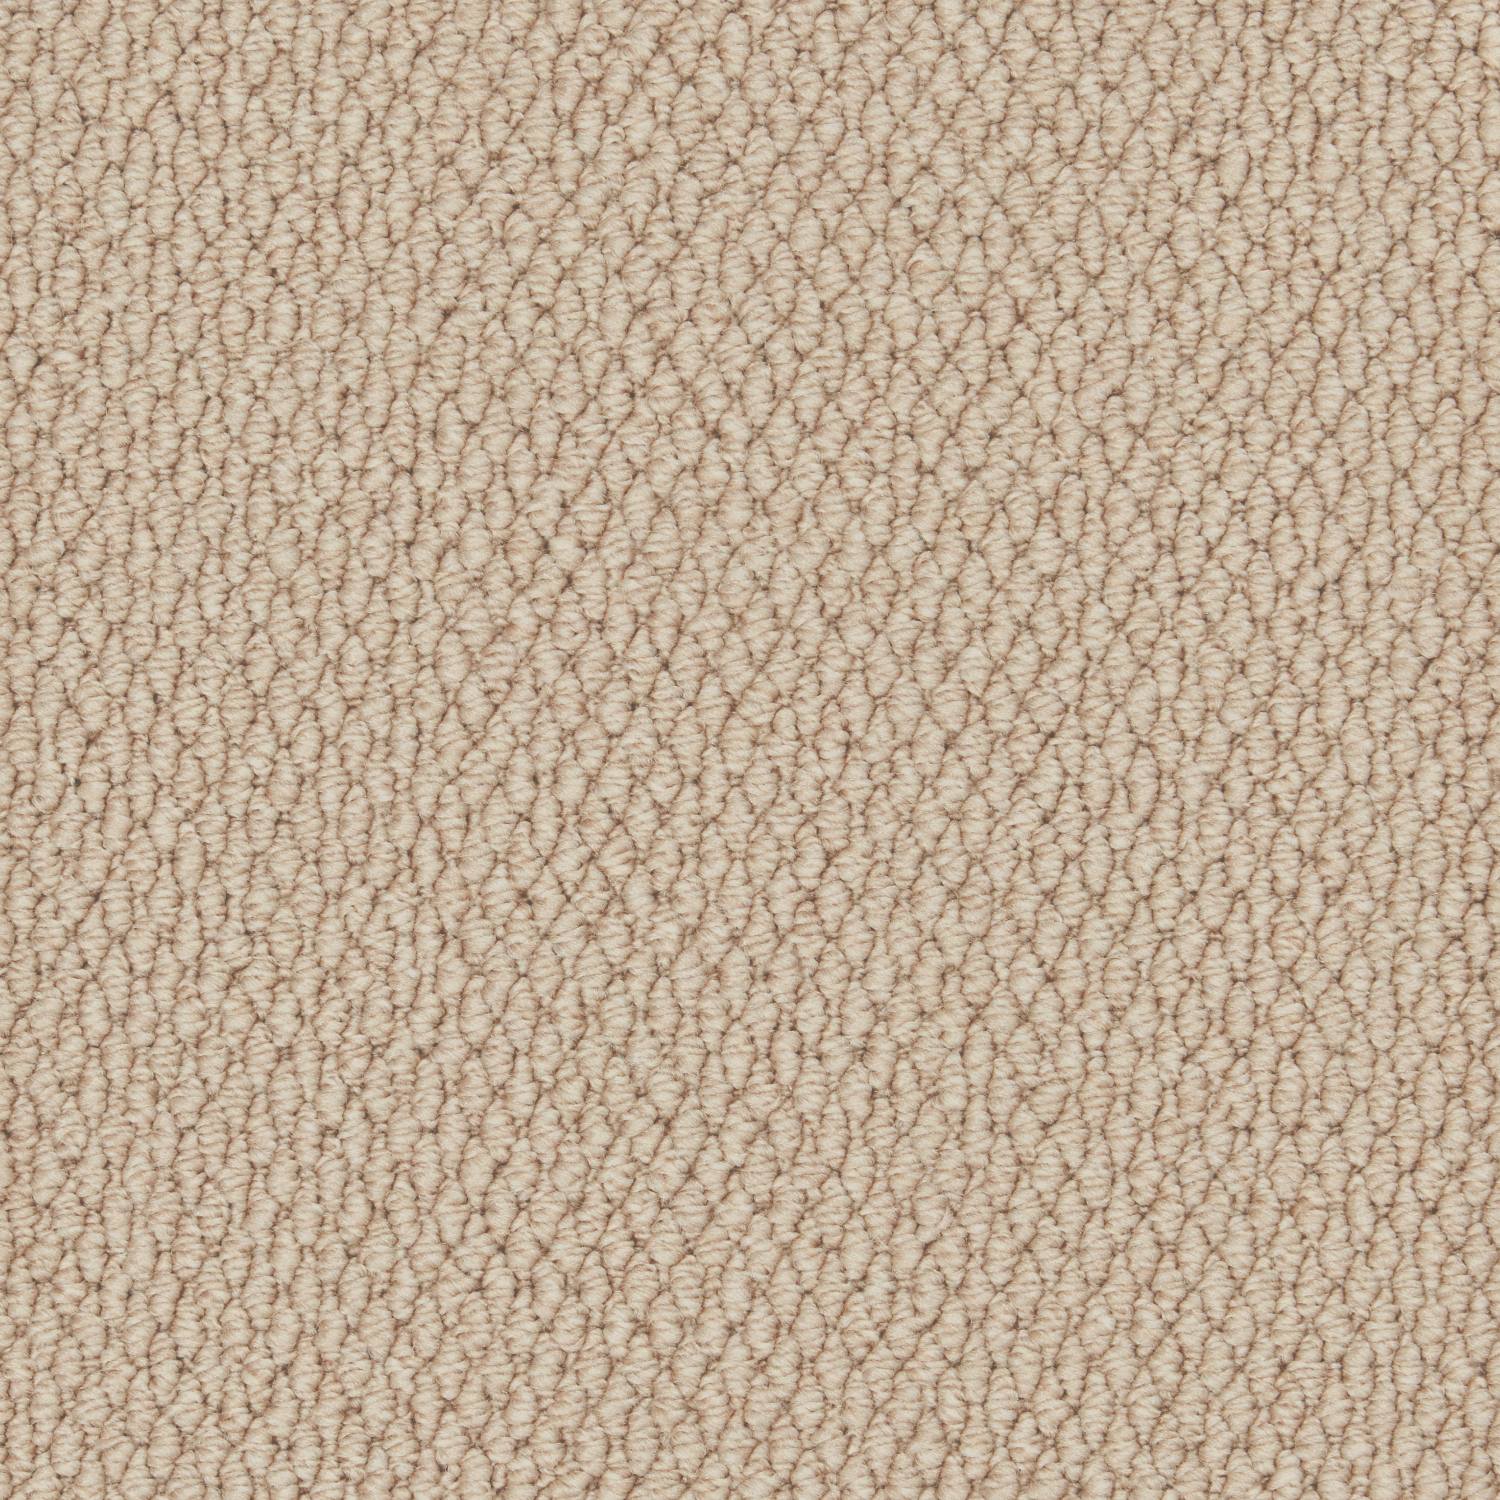 Rural Textures Loop Carpet - Light Syrup Weave